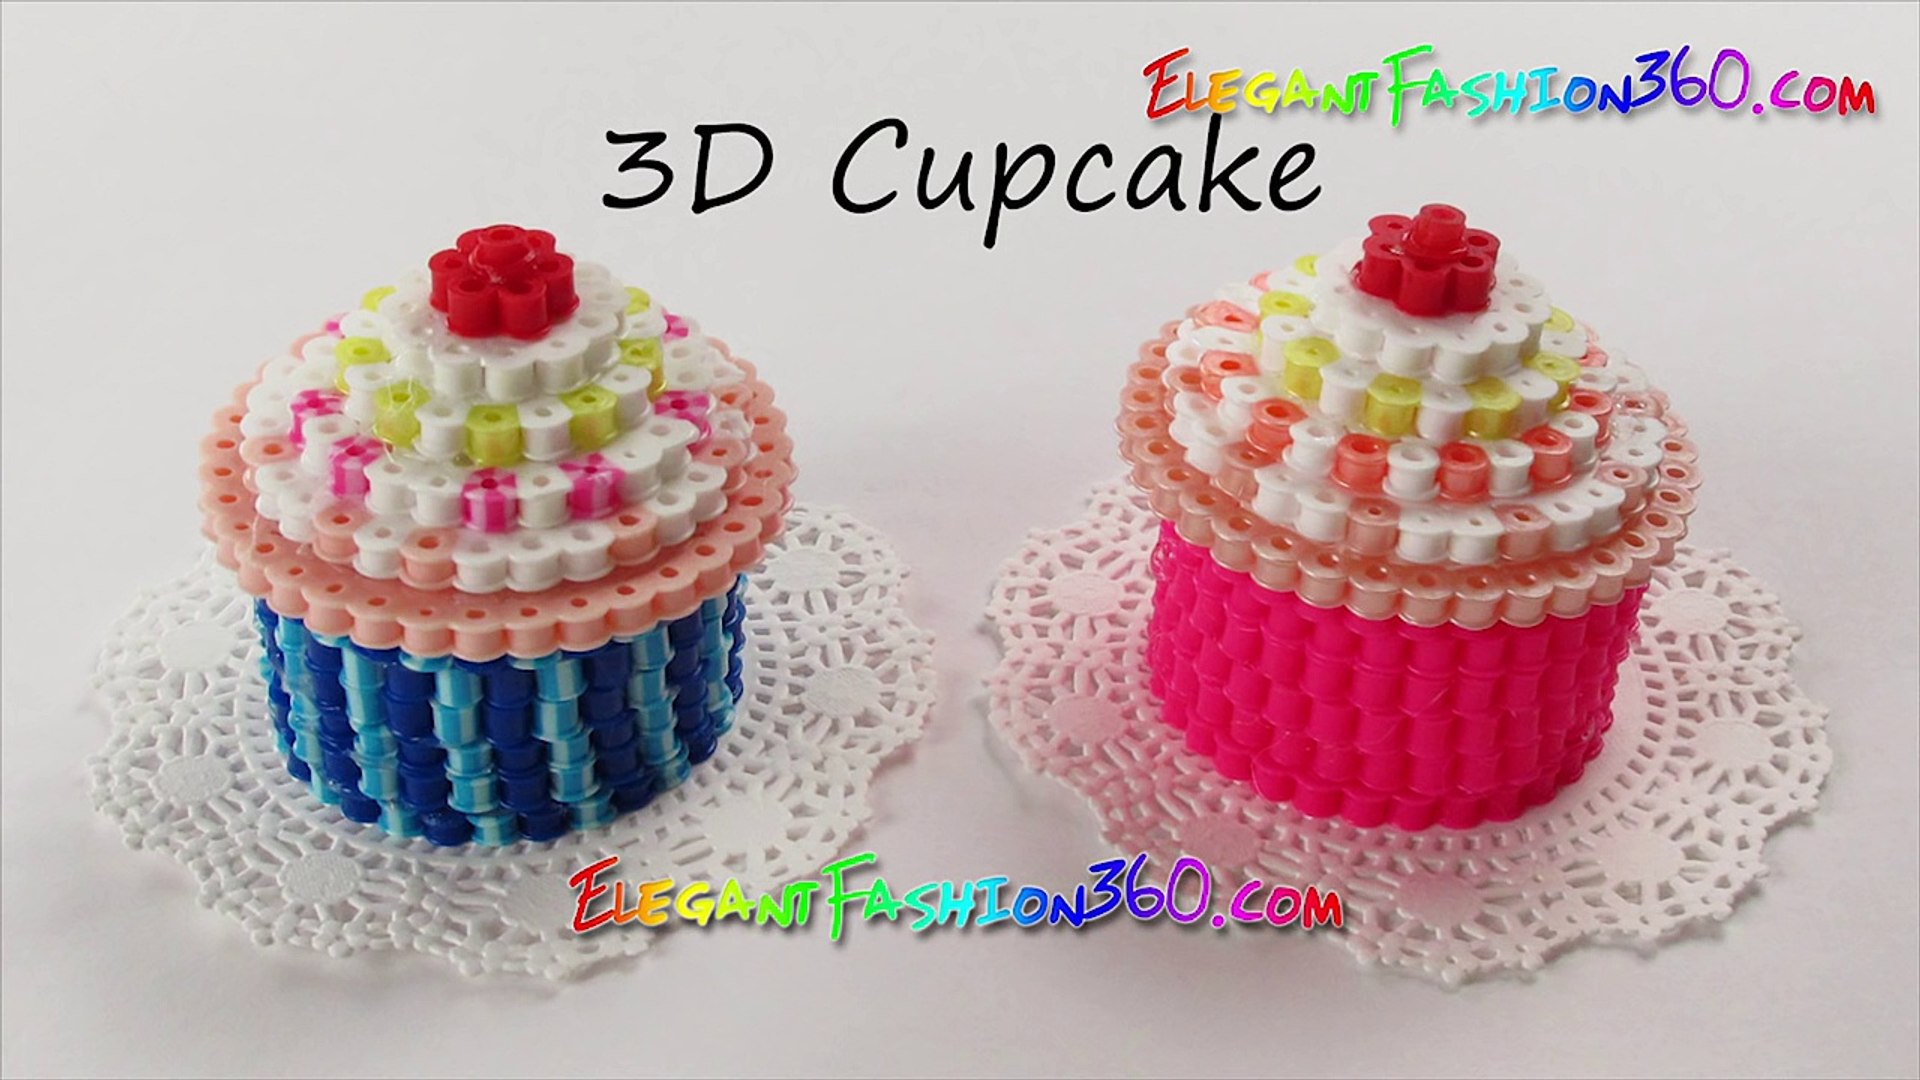 DIY Perler/Hama Beads Cupcake 3D - How to Tutorial by Elegant Fashion 360 -  video Dailymotion